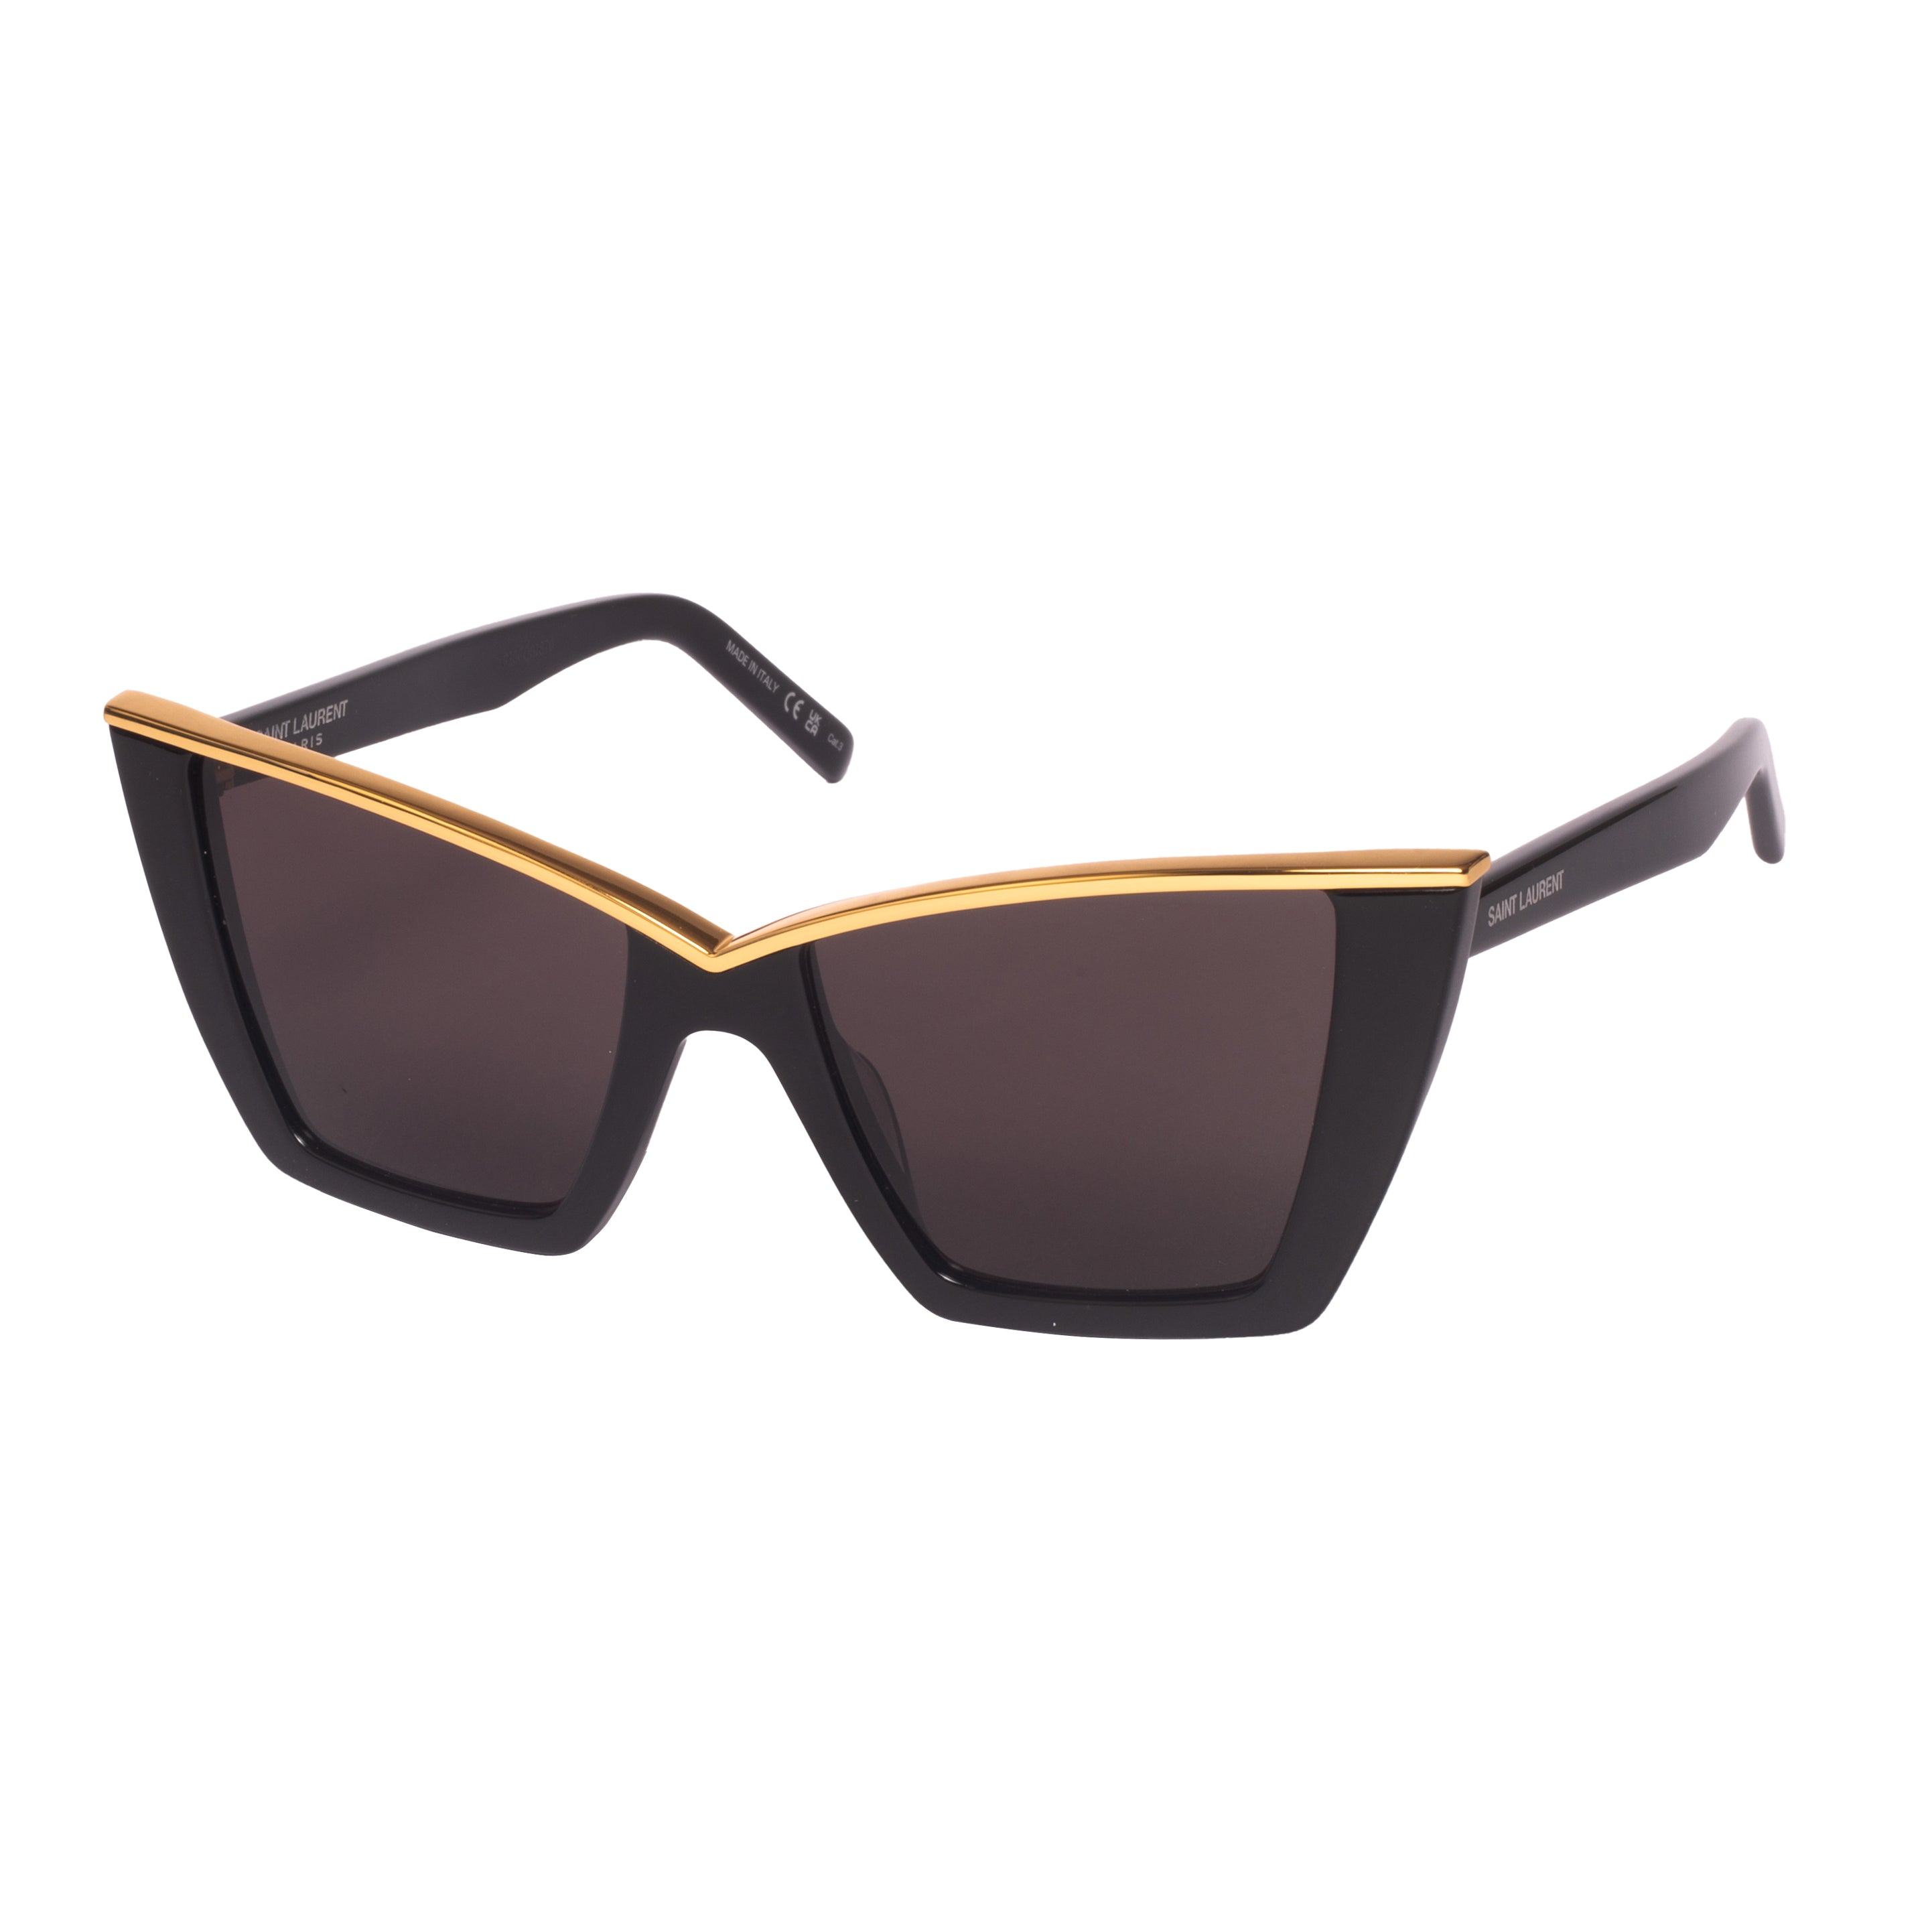 Saint Laurent-SL 570-54-001 Sunglasses - Premium Sunglasses from Saint Laurent - Just Rs. 28700! Shop now at Laxmi Opticians